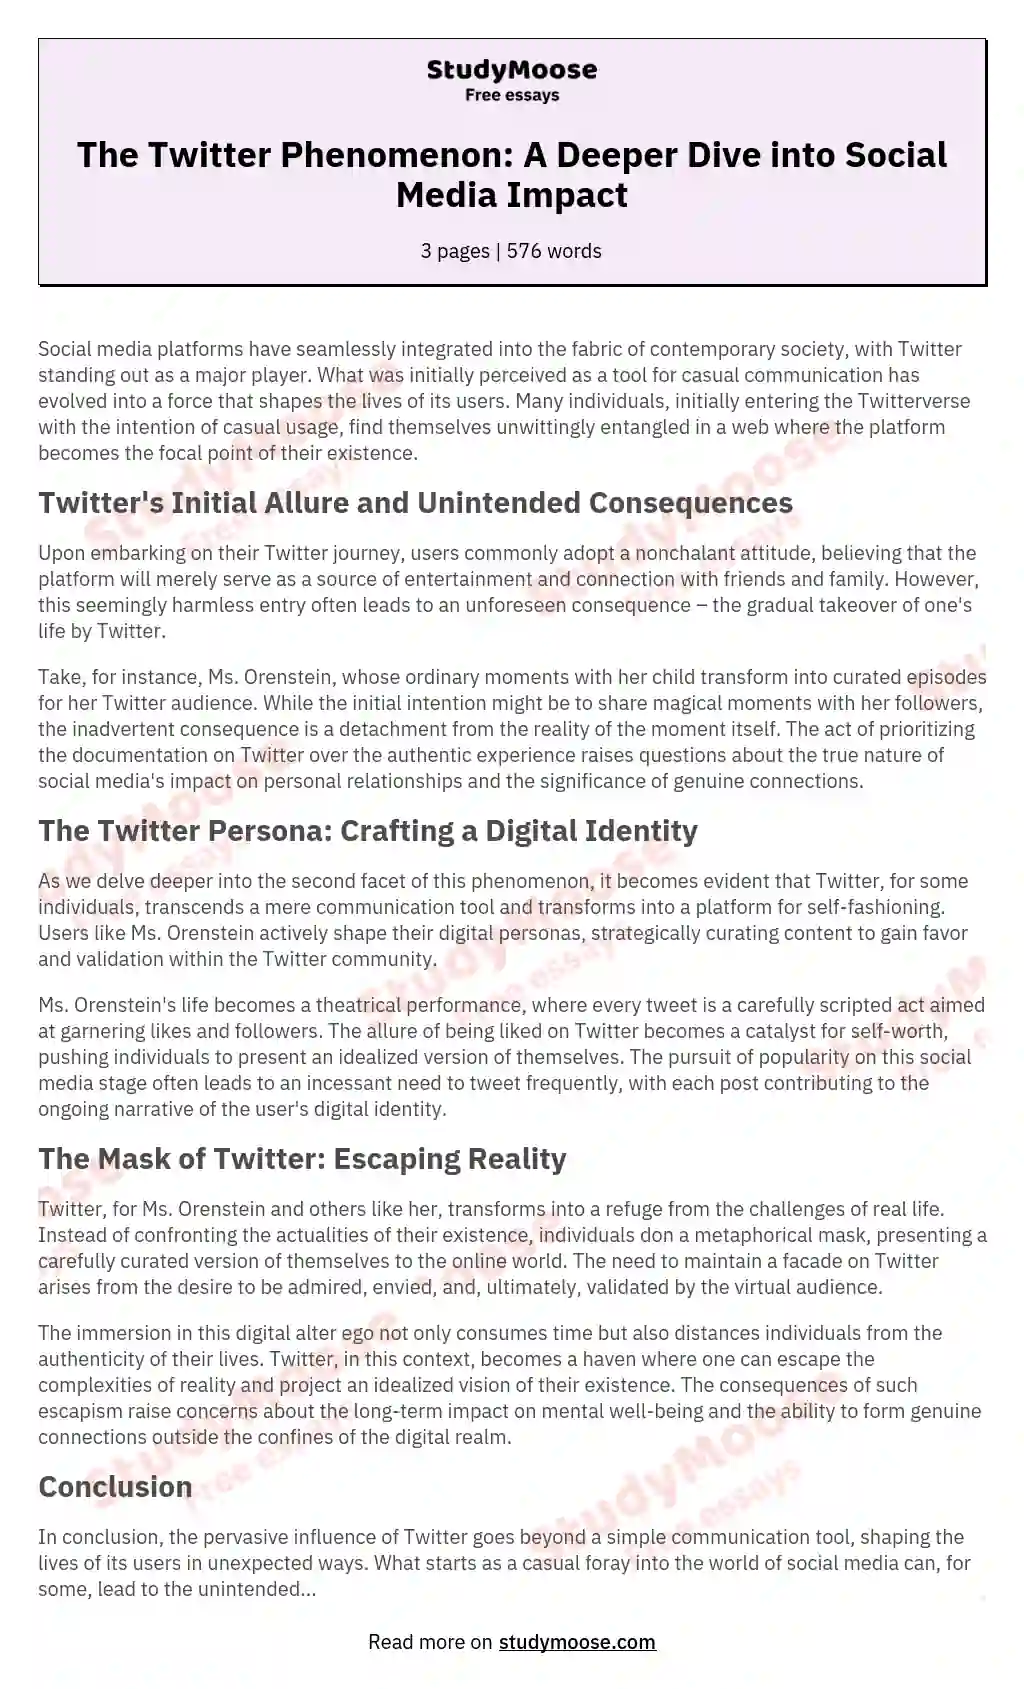 The Twitter Phenomenon: A Deeper Dive into Social Media Impact essay